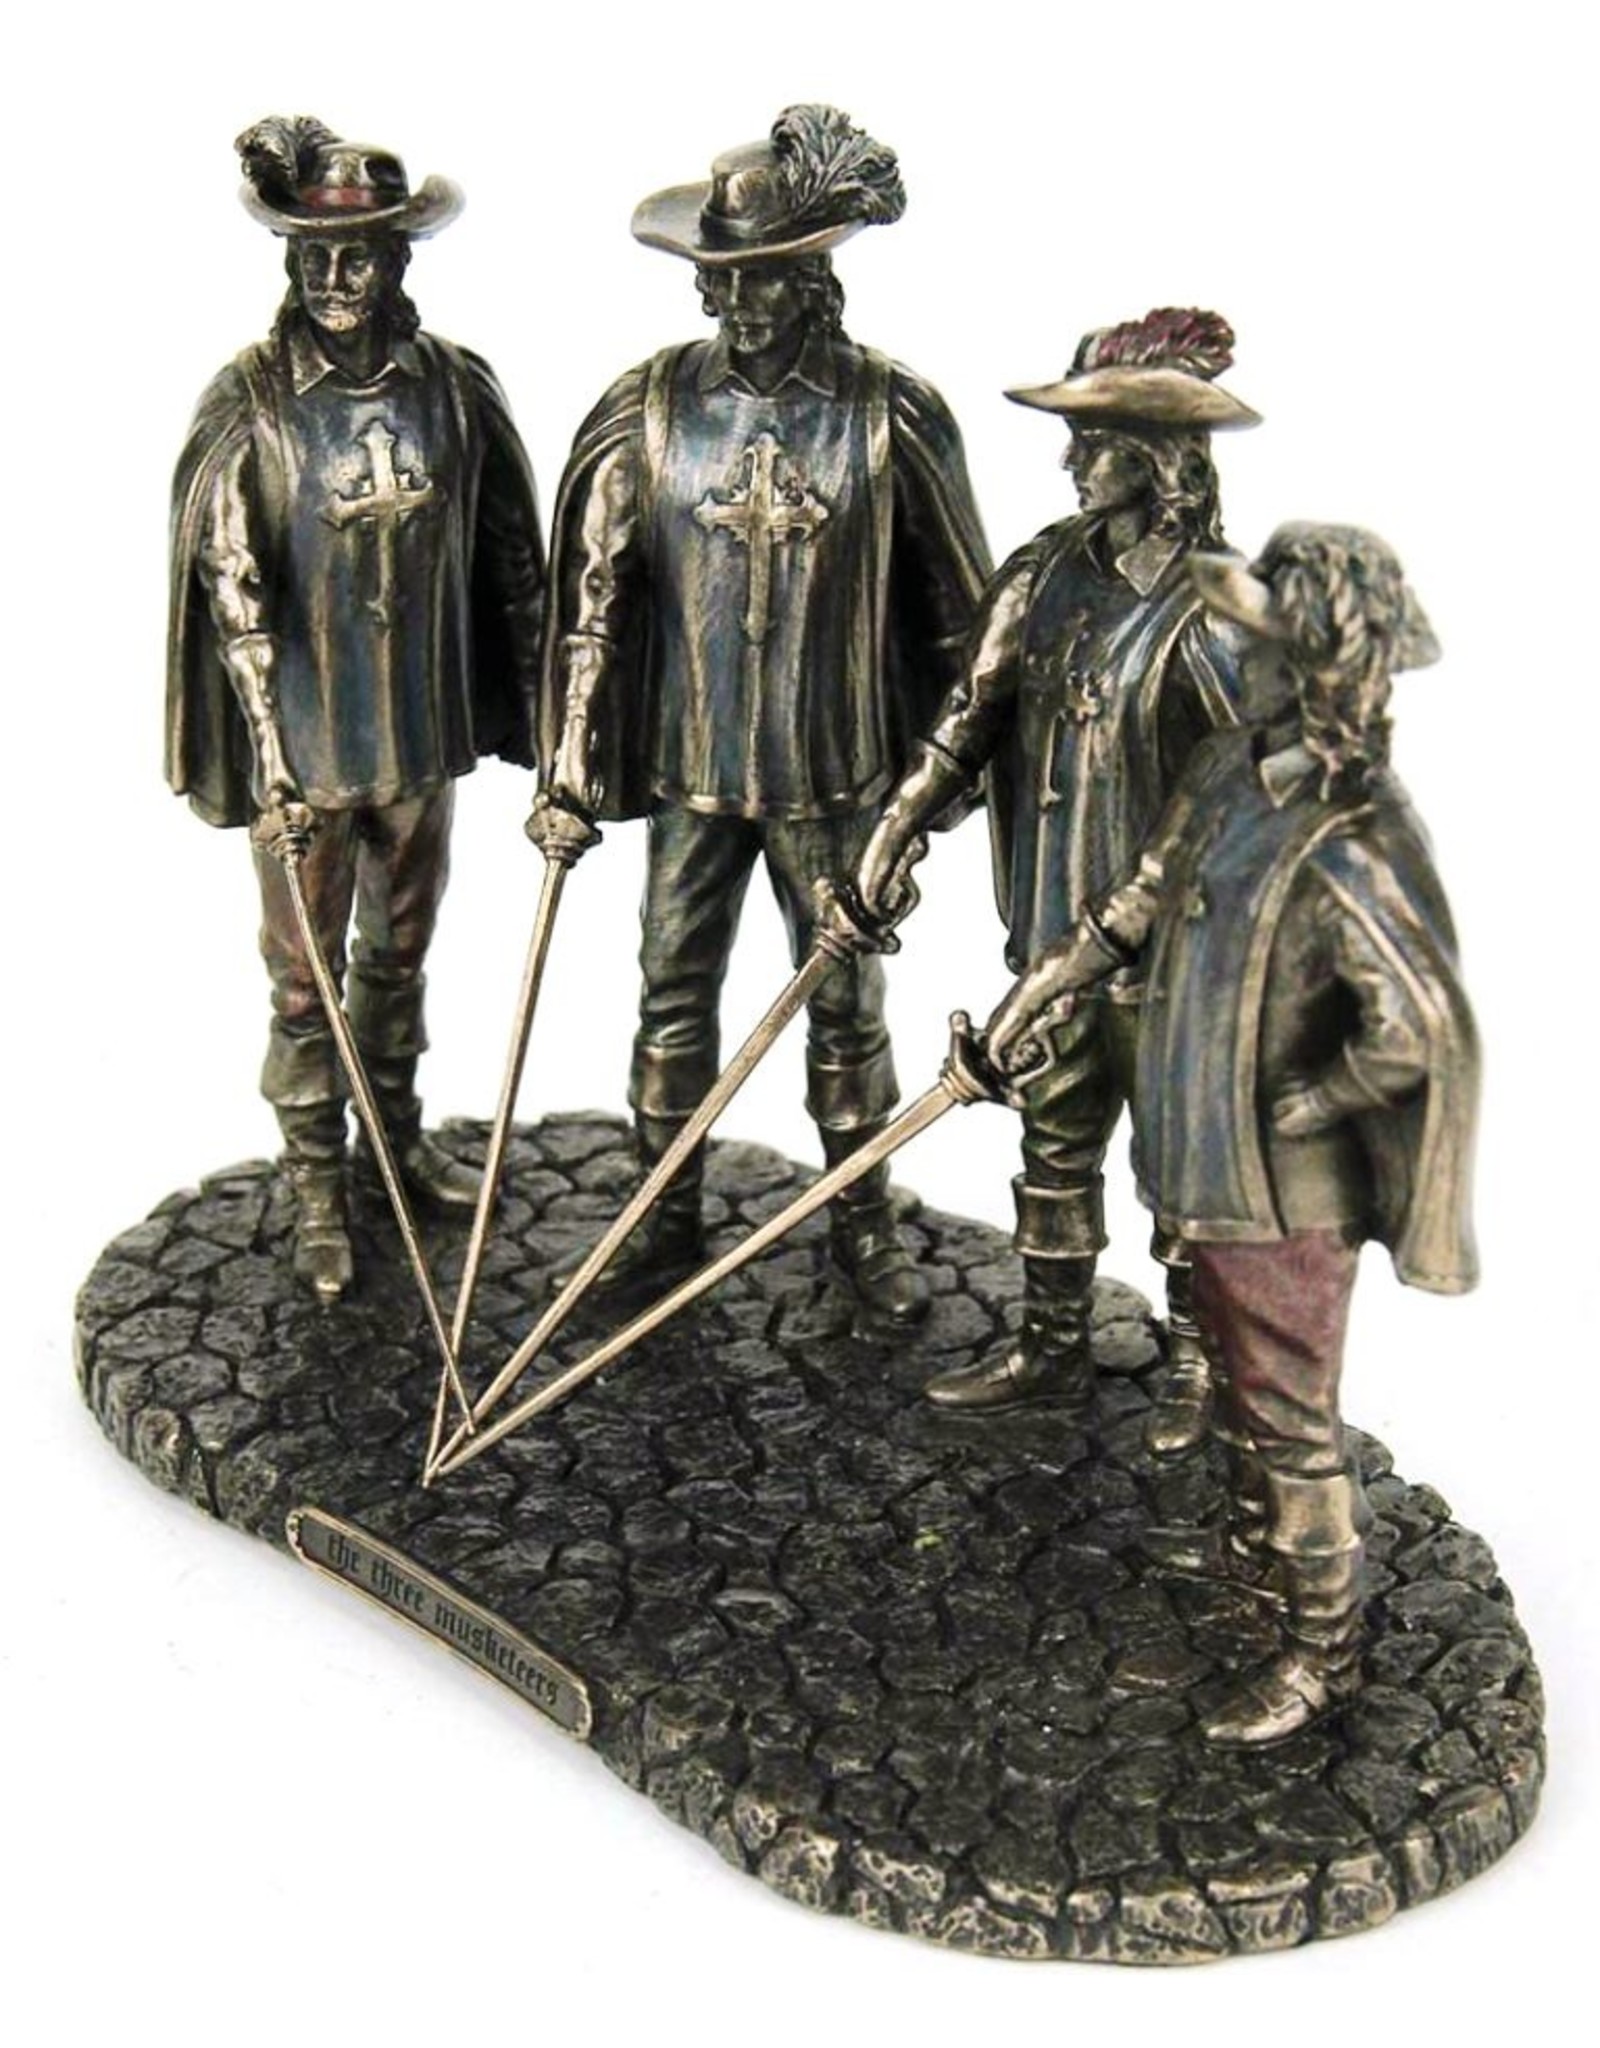 Veronese Design Veronese Design - The Three Musketeers Bronzed Statue